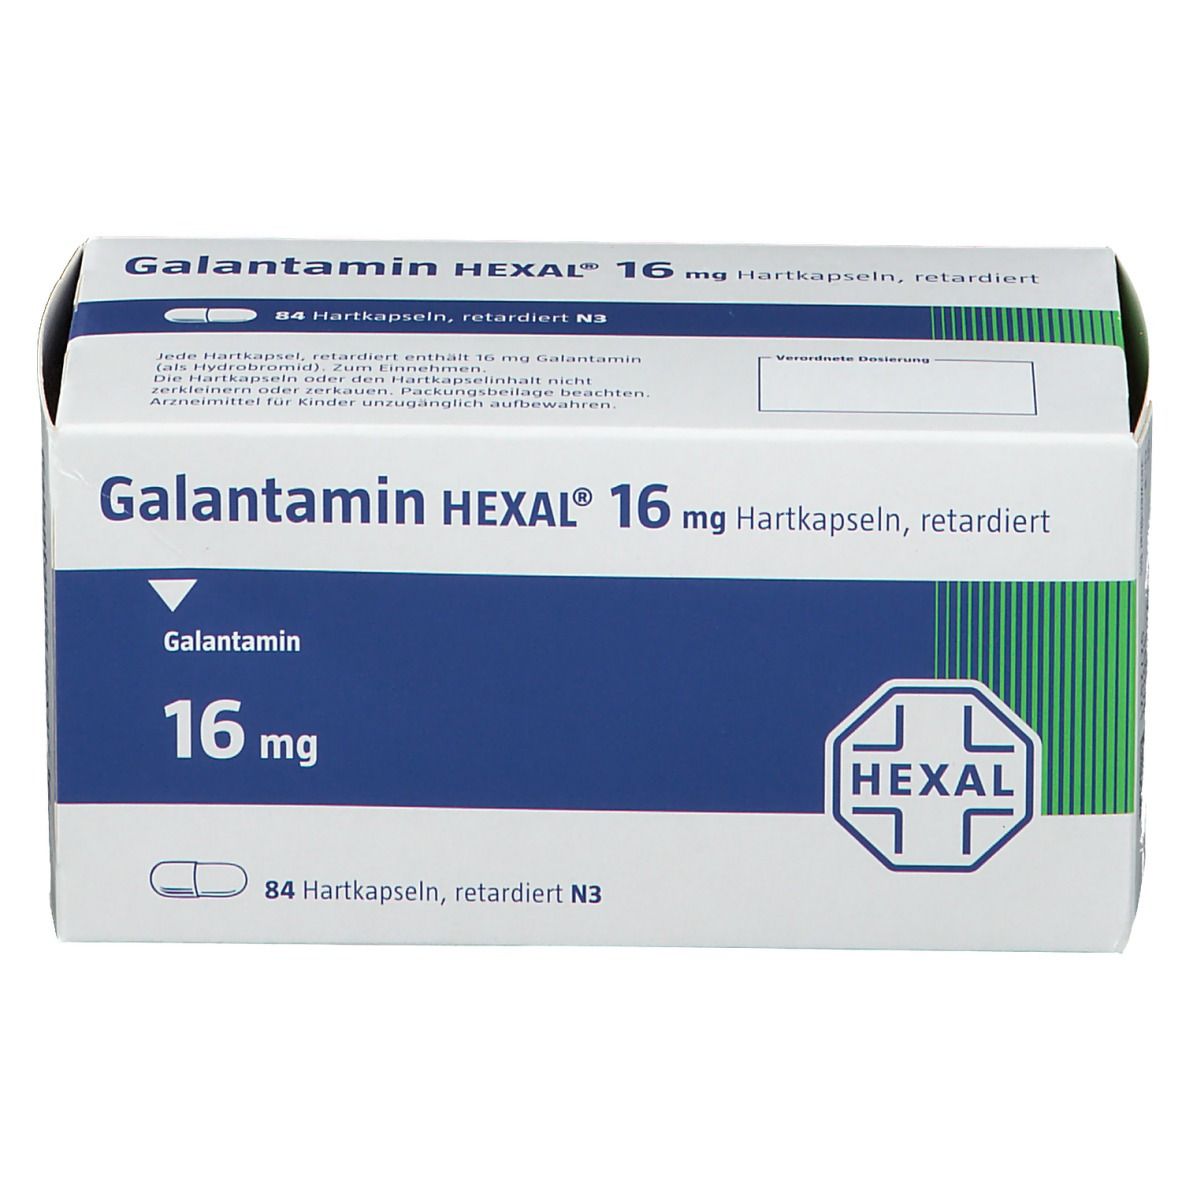 Galantamin HEXAL® 16 mg